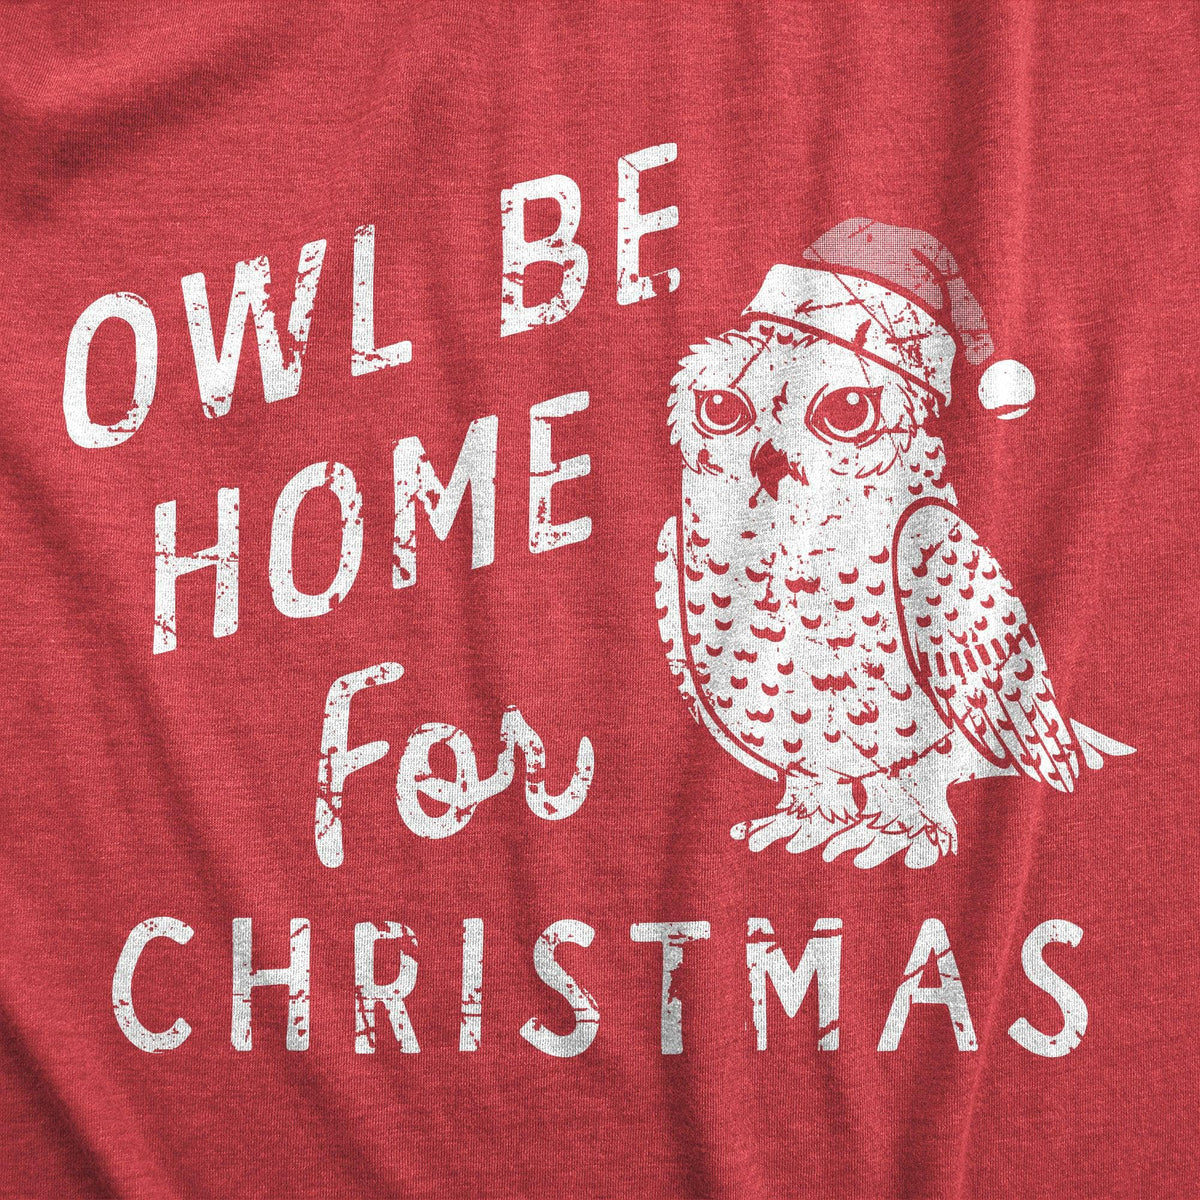 Owl Be Home For Christmas Men&#39;s Tshirt  -  Crazy Dog T-Shirts